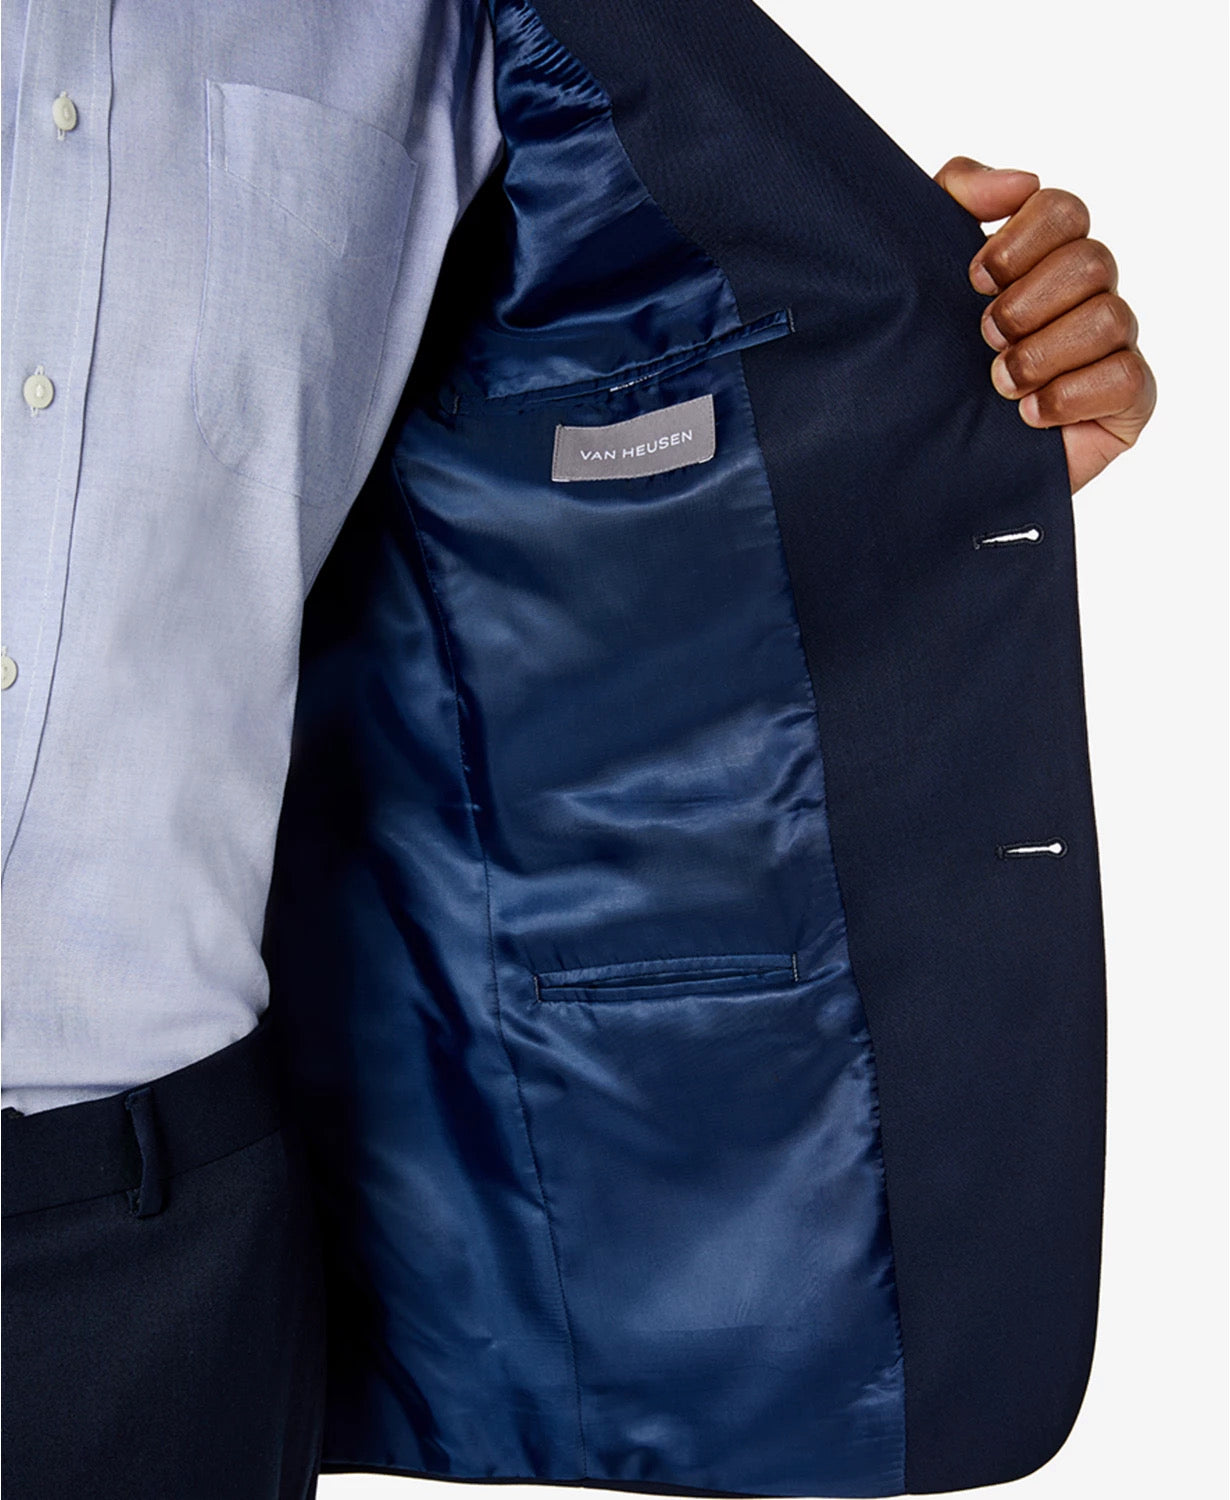 Van Heusen Men's Suit Navy Blue 42L / 35 x 32 Flex Slim Fit